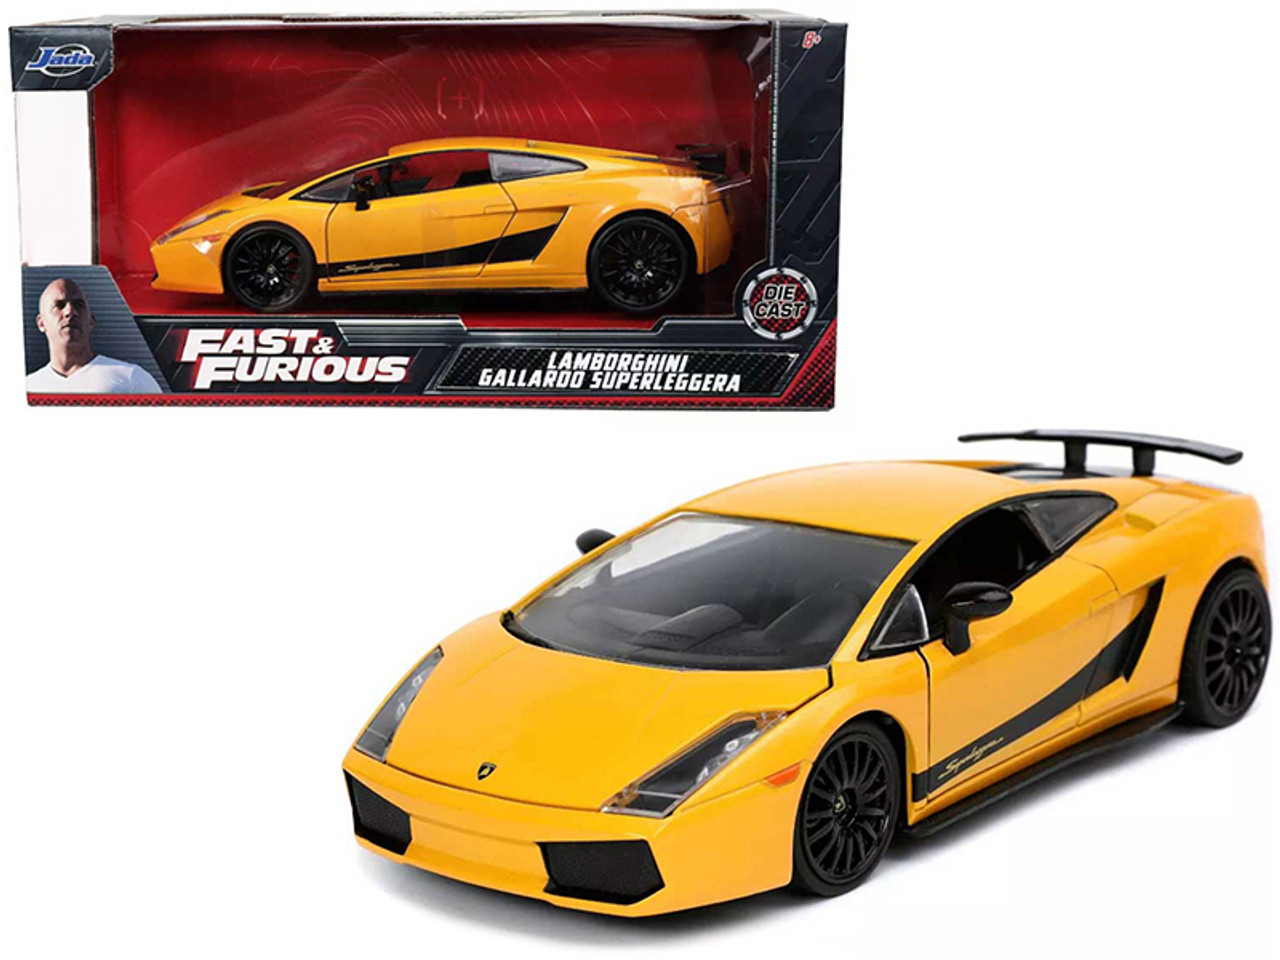 1/24 Jada Lamborghini Gallardo Superleggera Yellow with Black Stripes "Fast & Furious" Movie Diecast Model Car